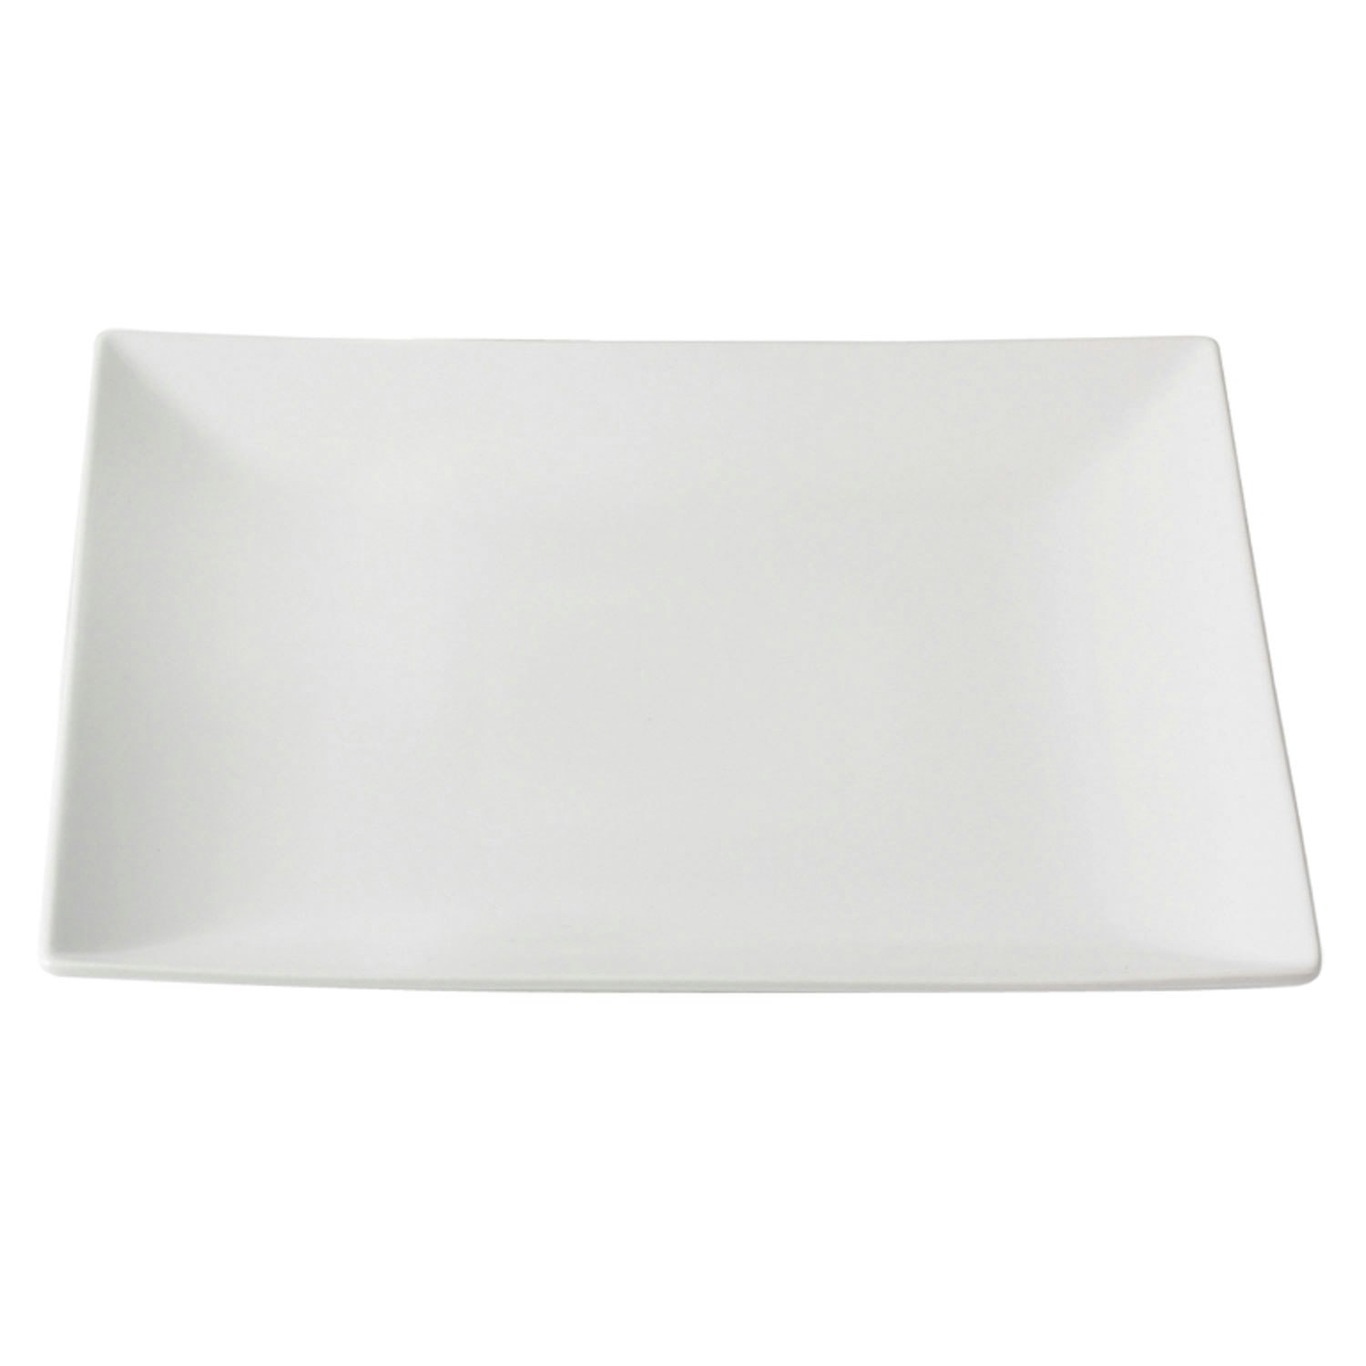 Quadro Plate 26x26 cm, White